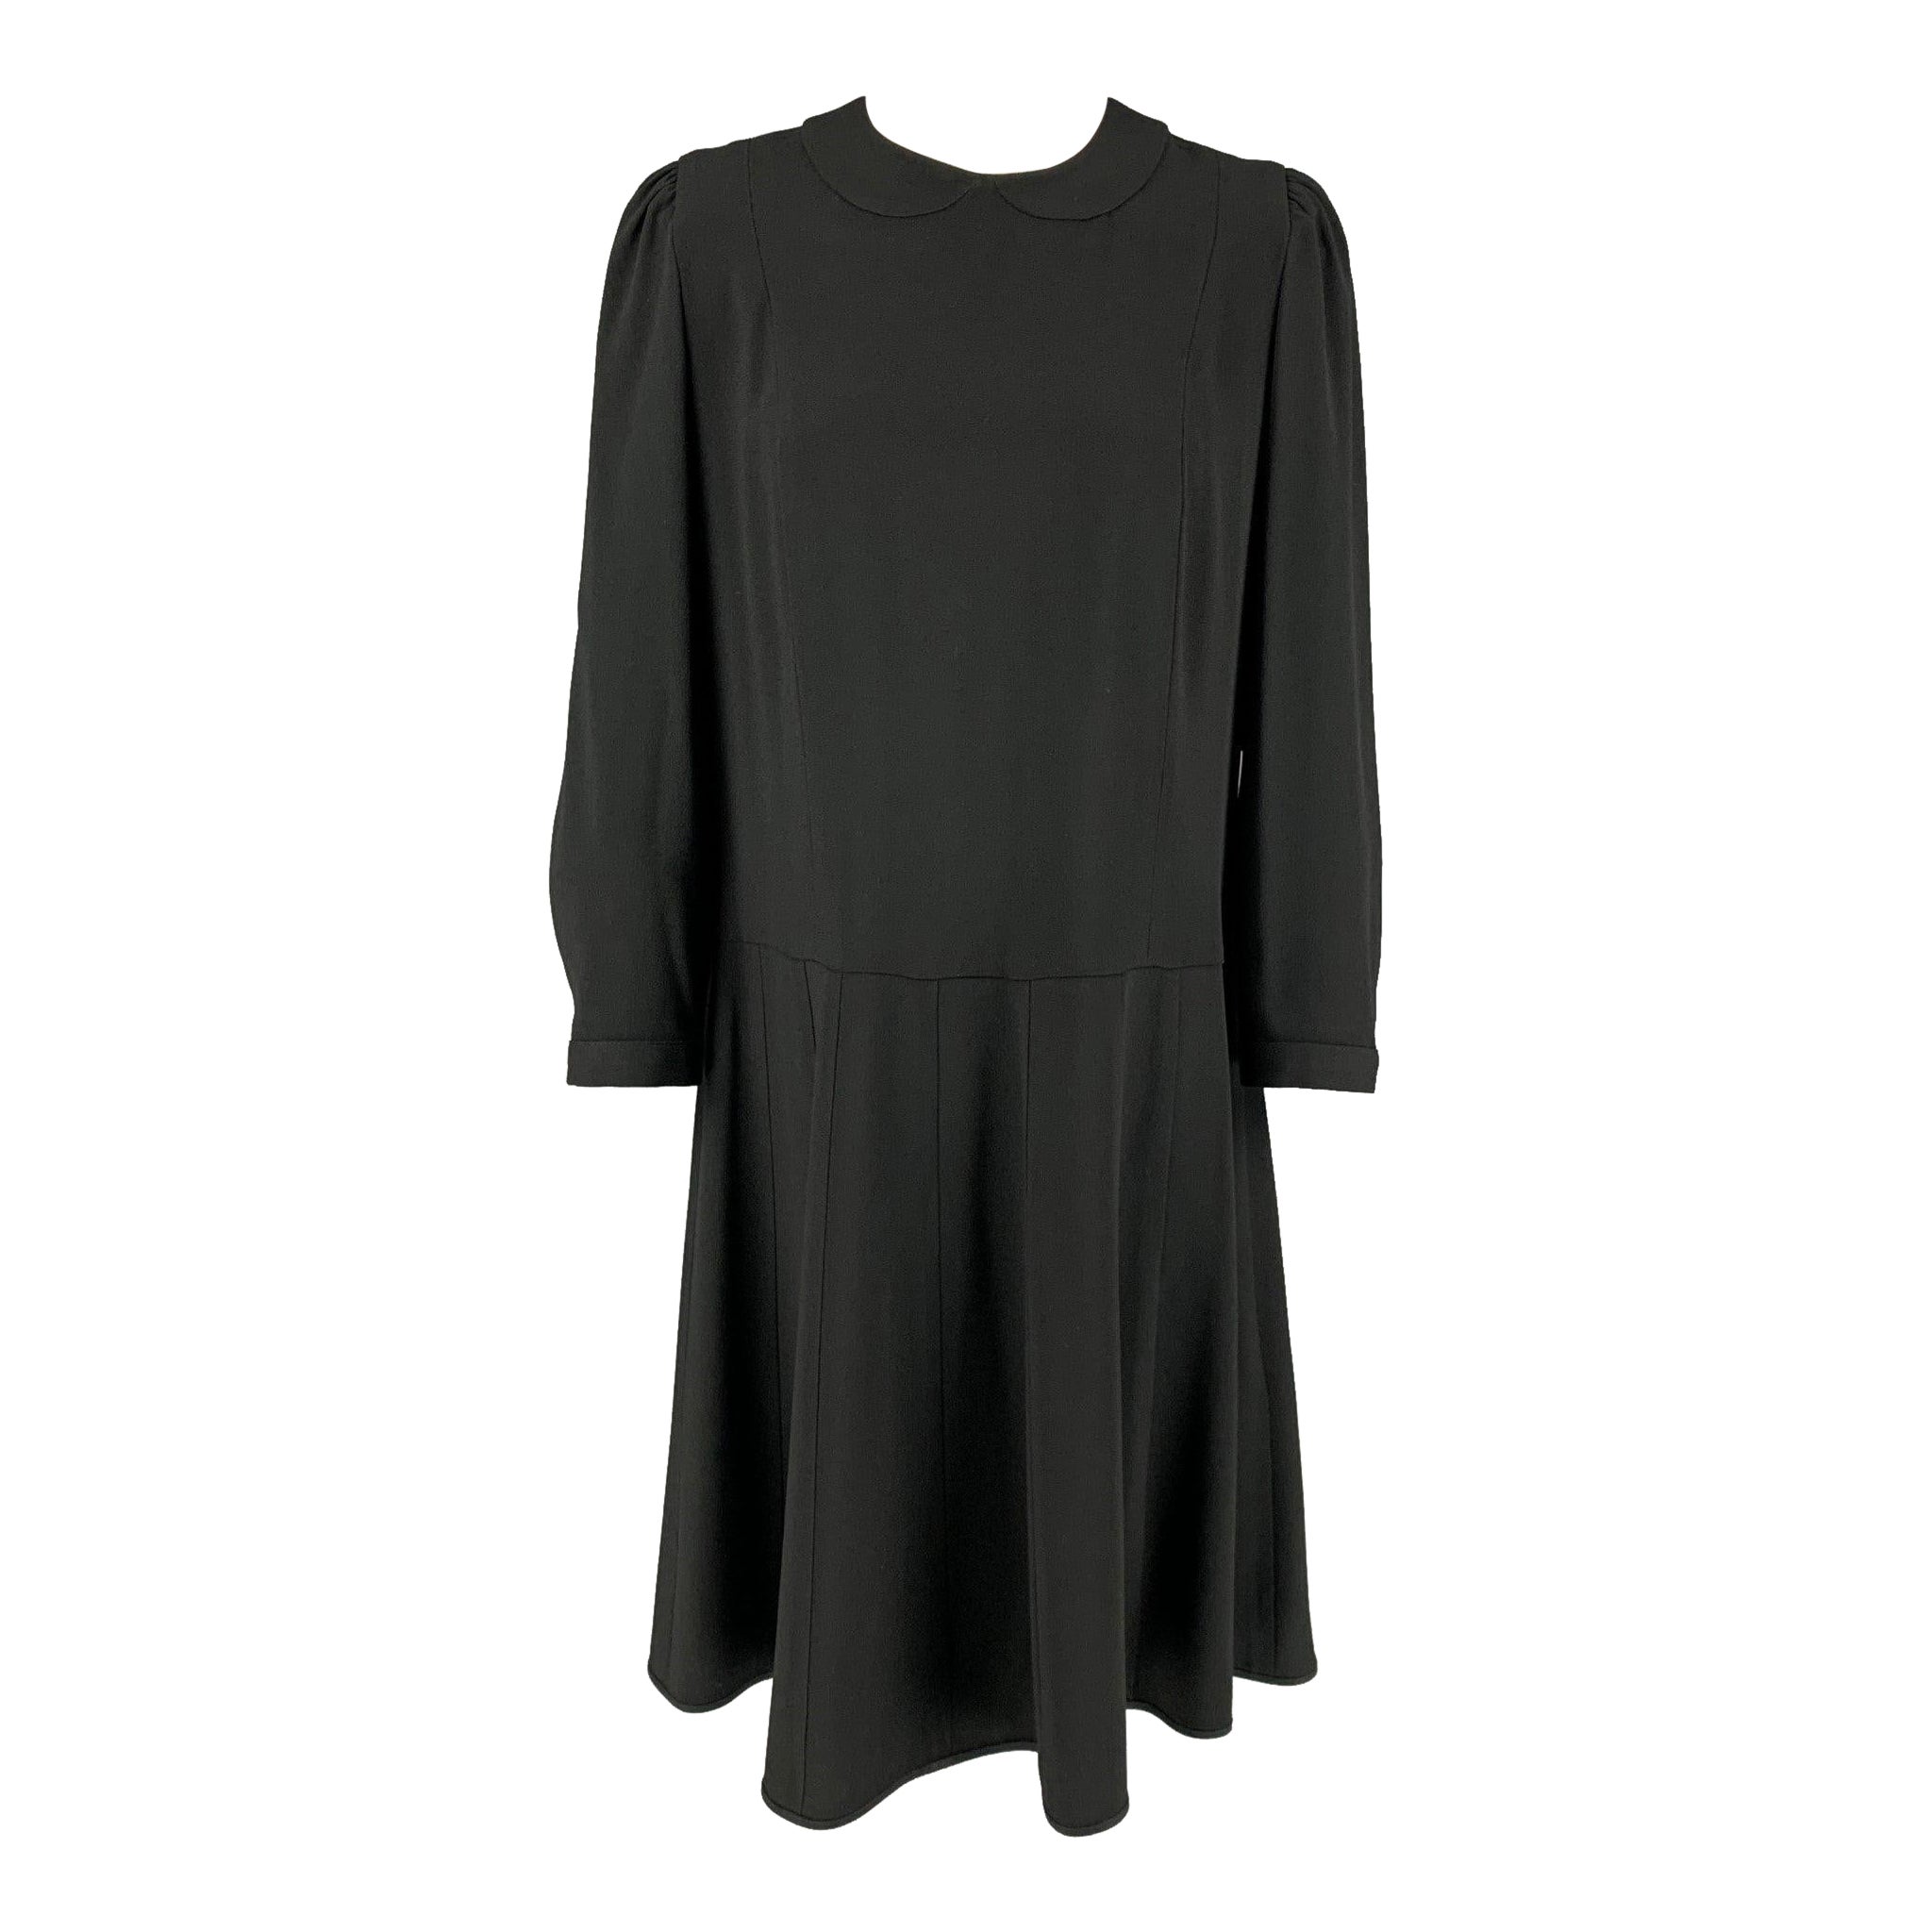 MARC JACOBS RUNWAY Size 6 Black Acetate / Viscose A-Line Dress For Sale